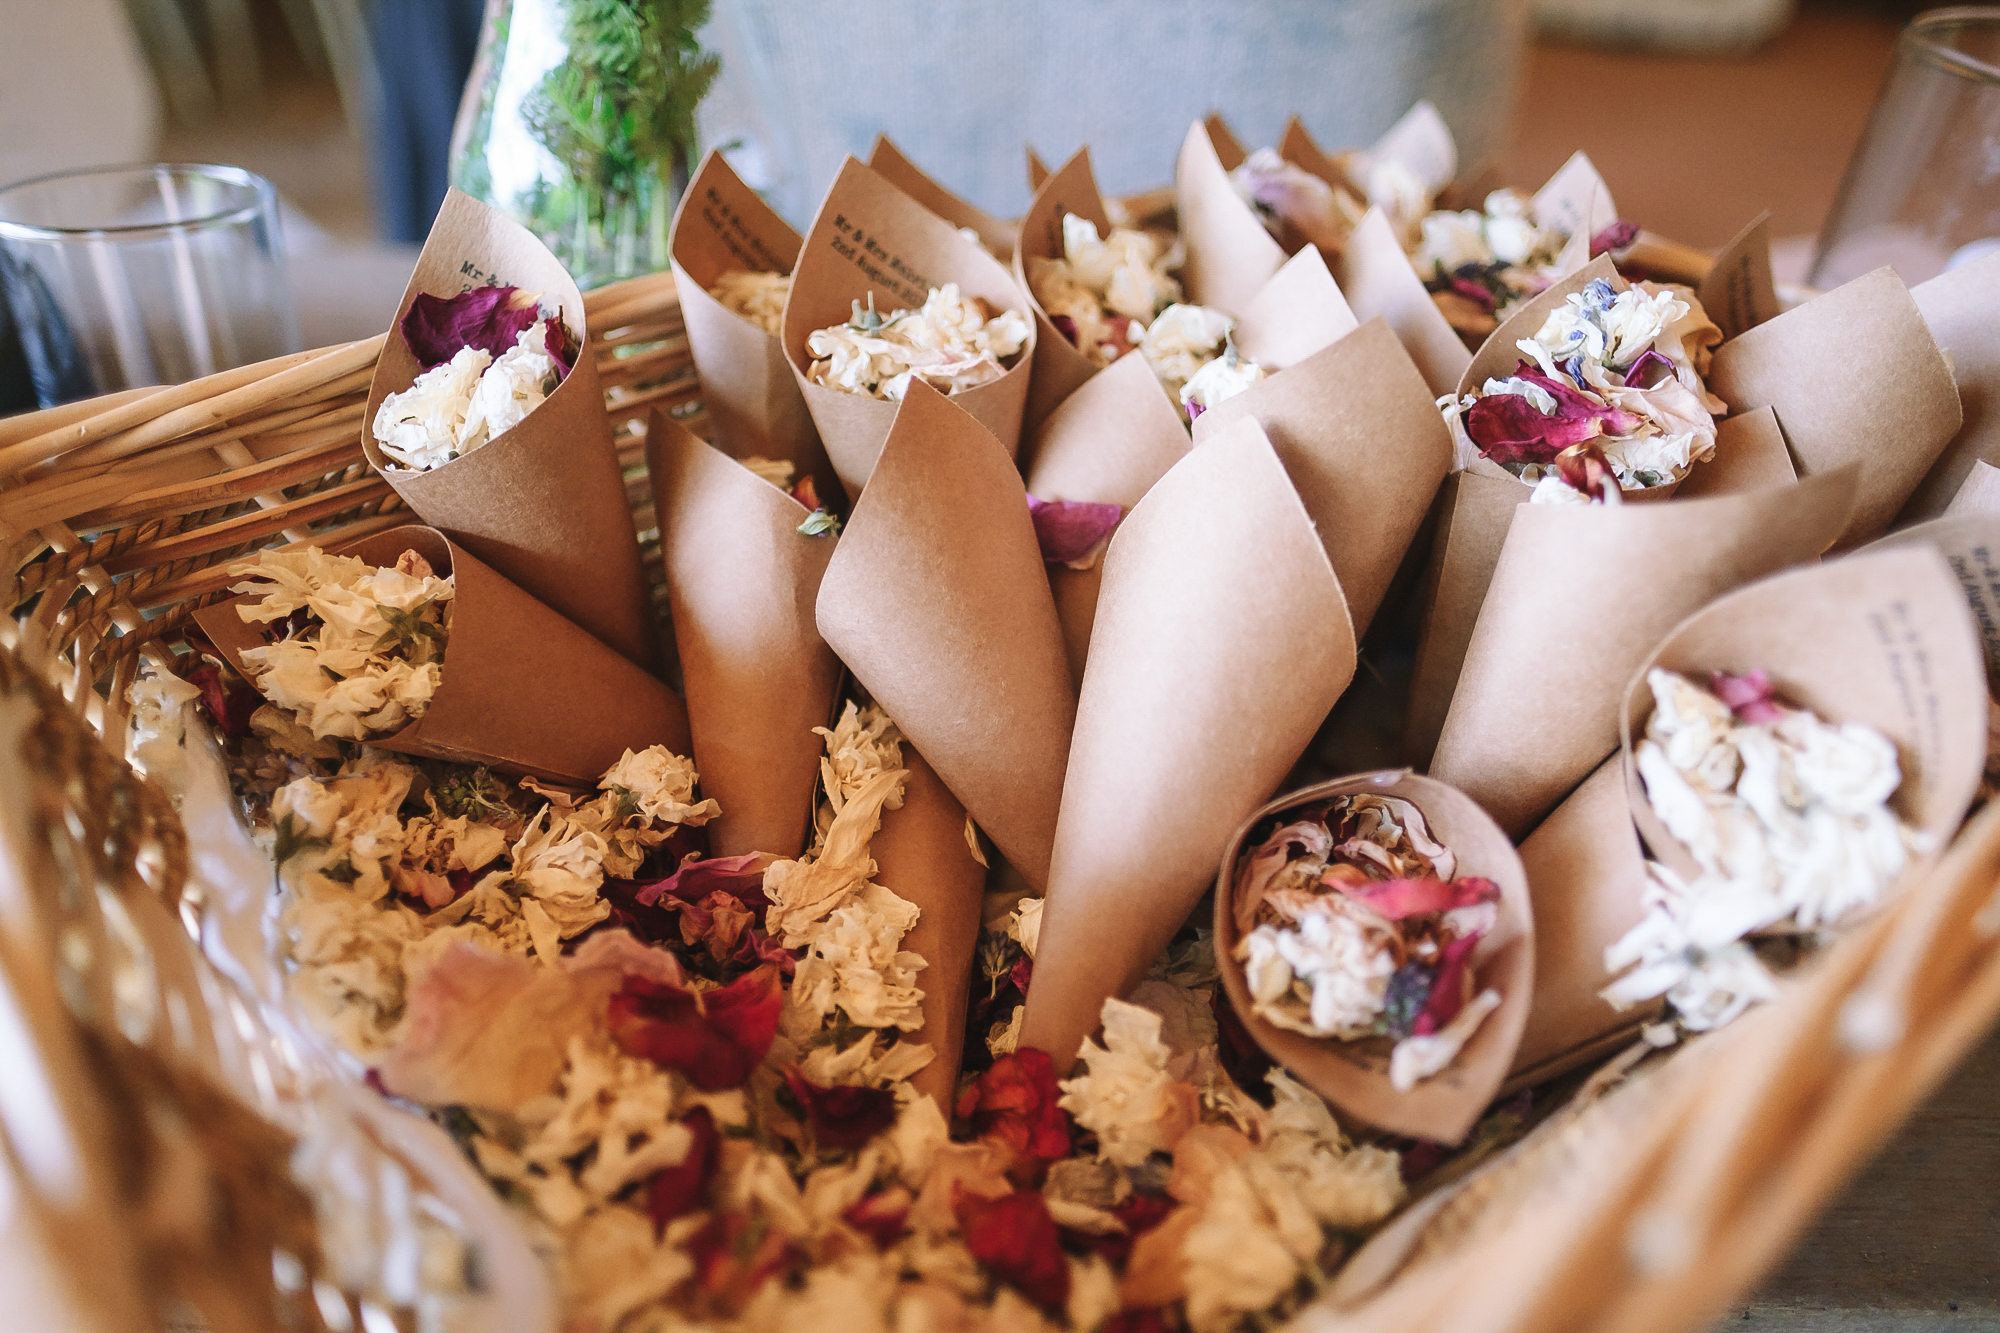 Dried flower petals for natural confetti - wedding ideas - eco friendly wedding